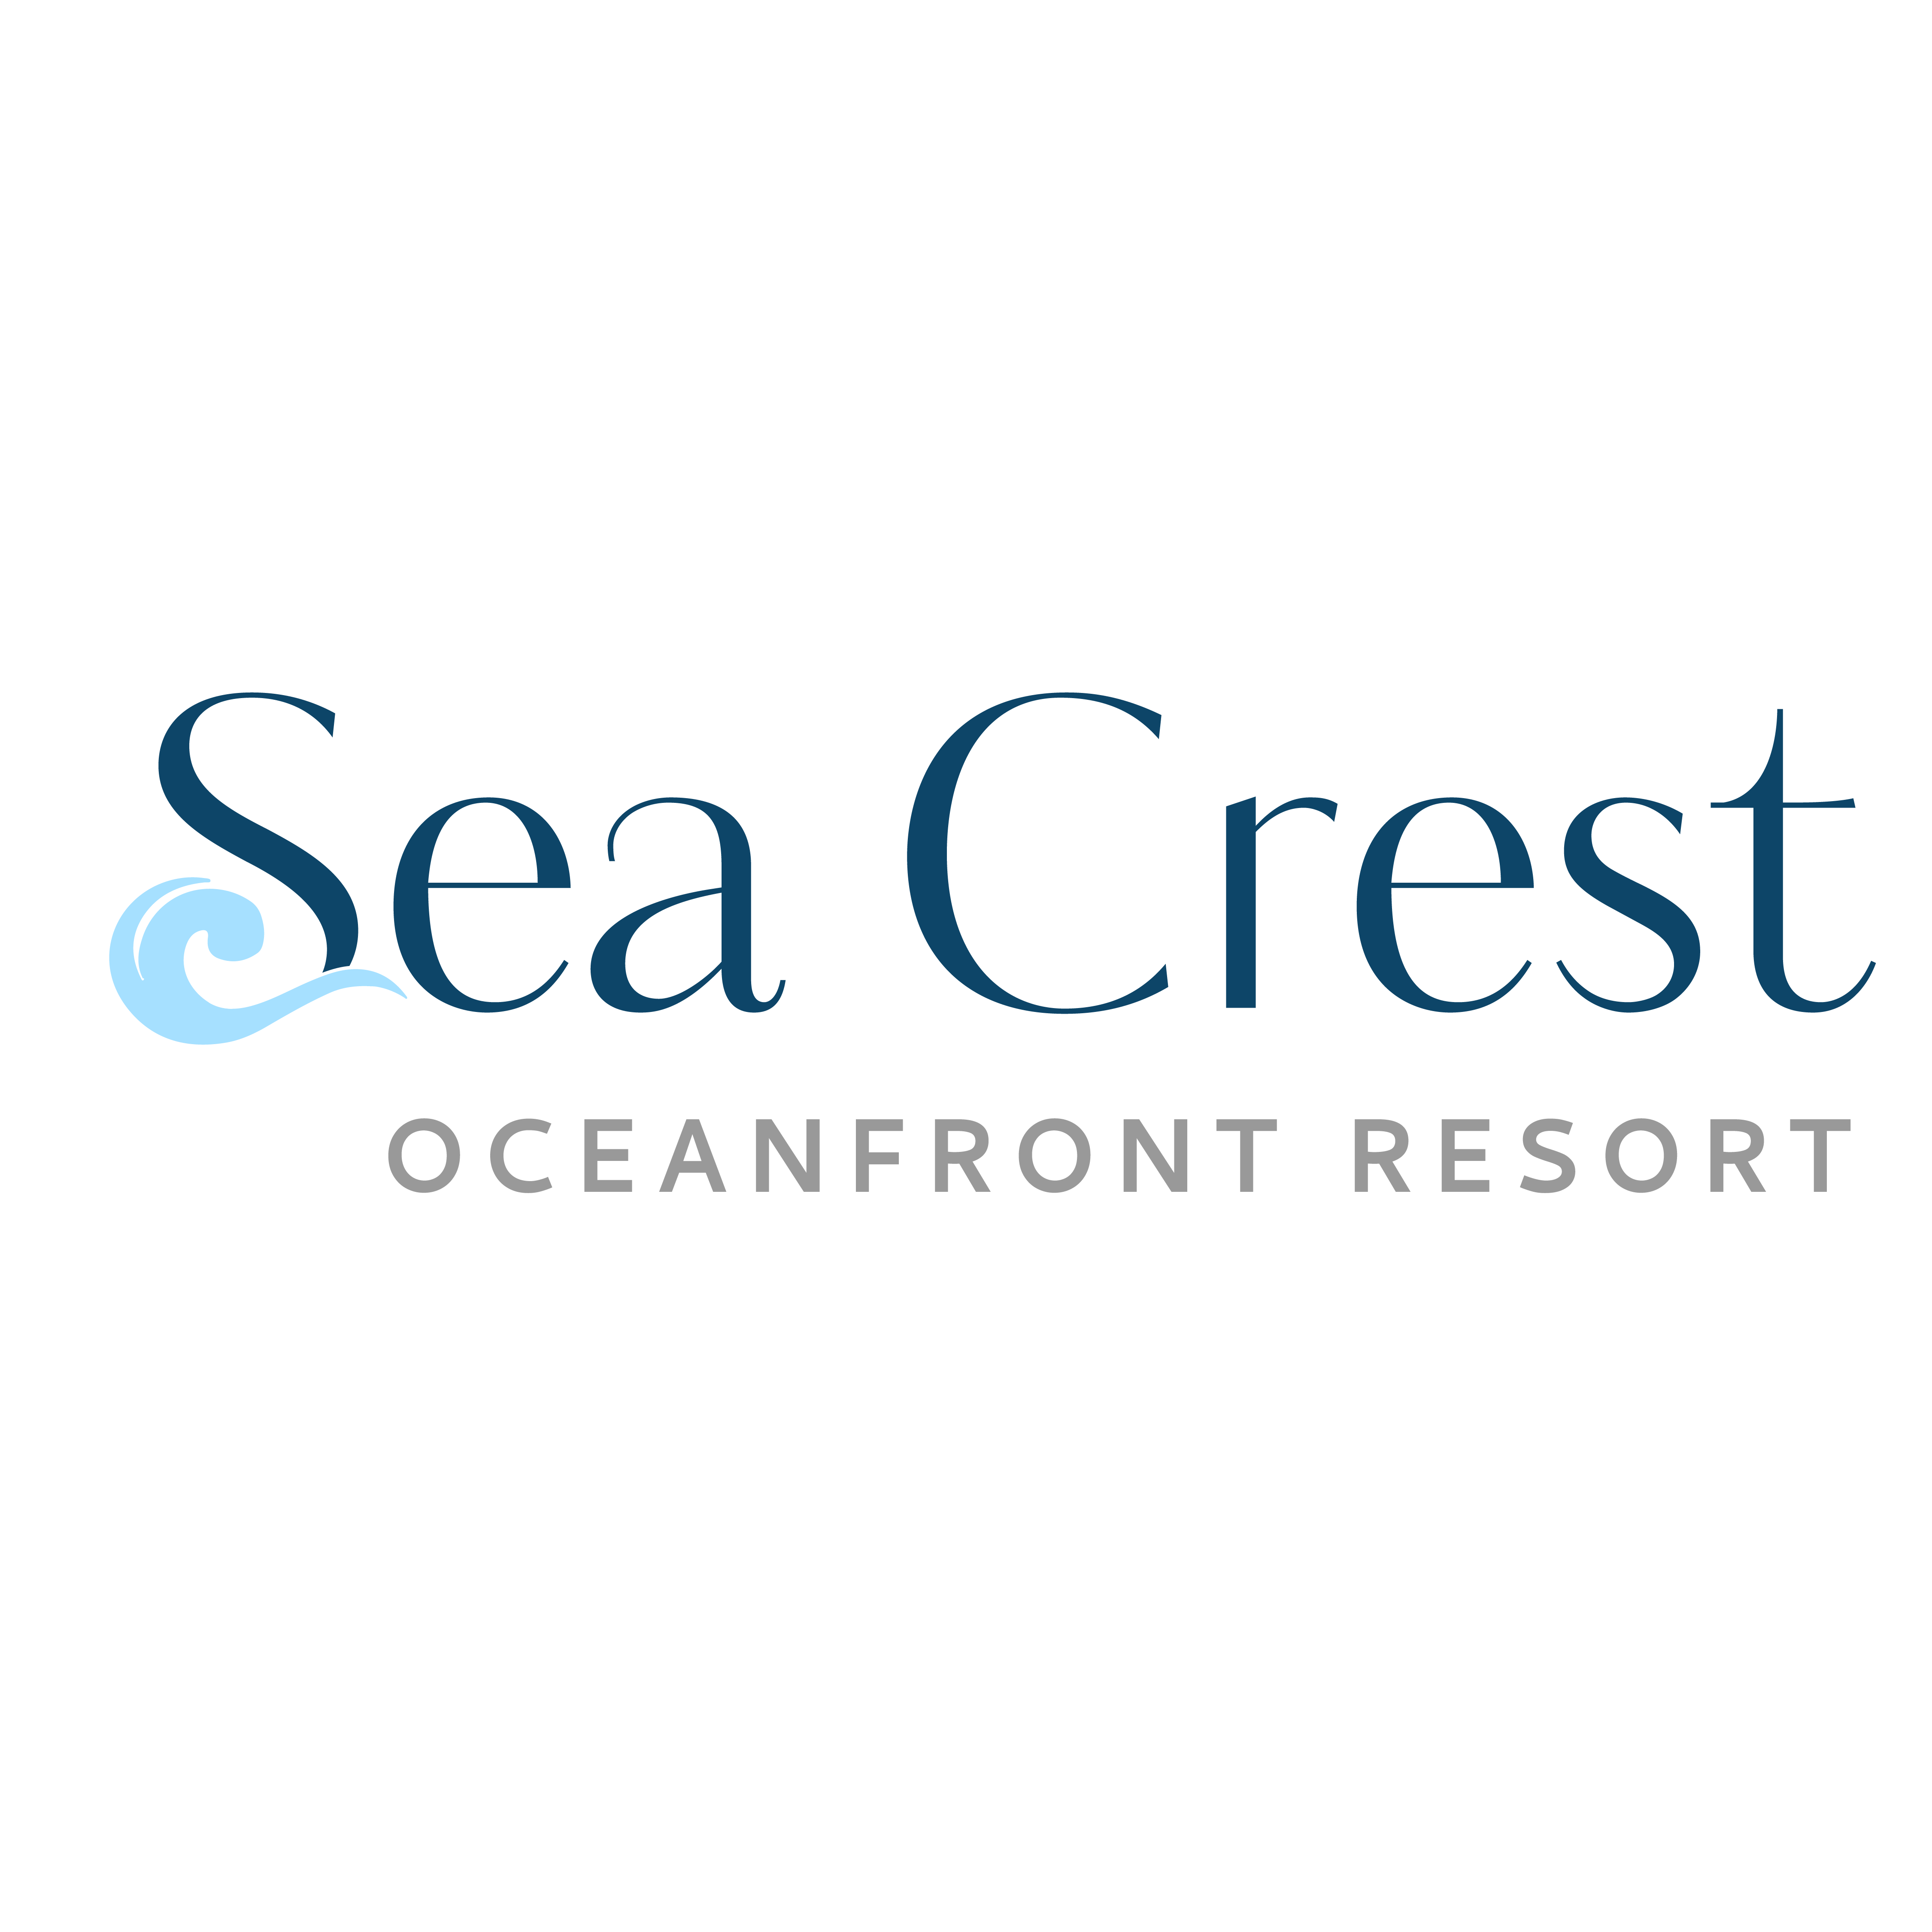 sea crest resort logo